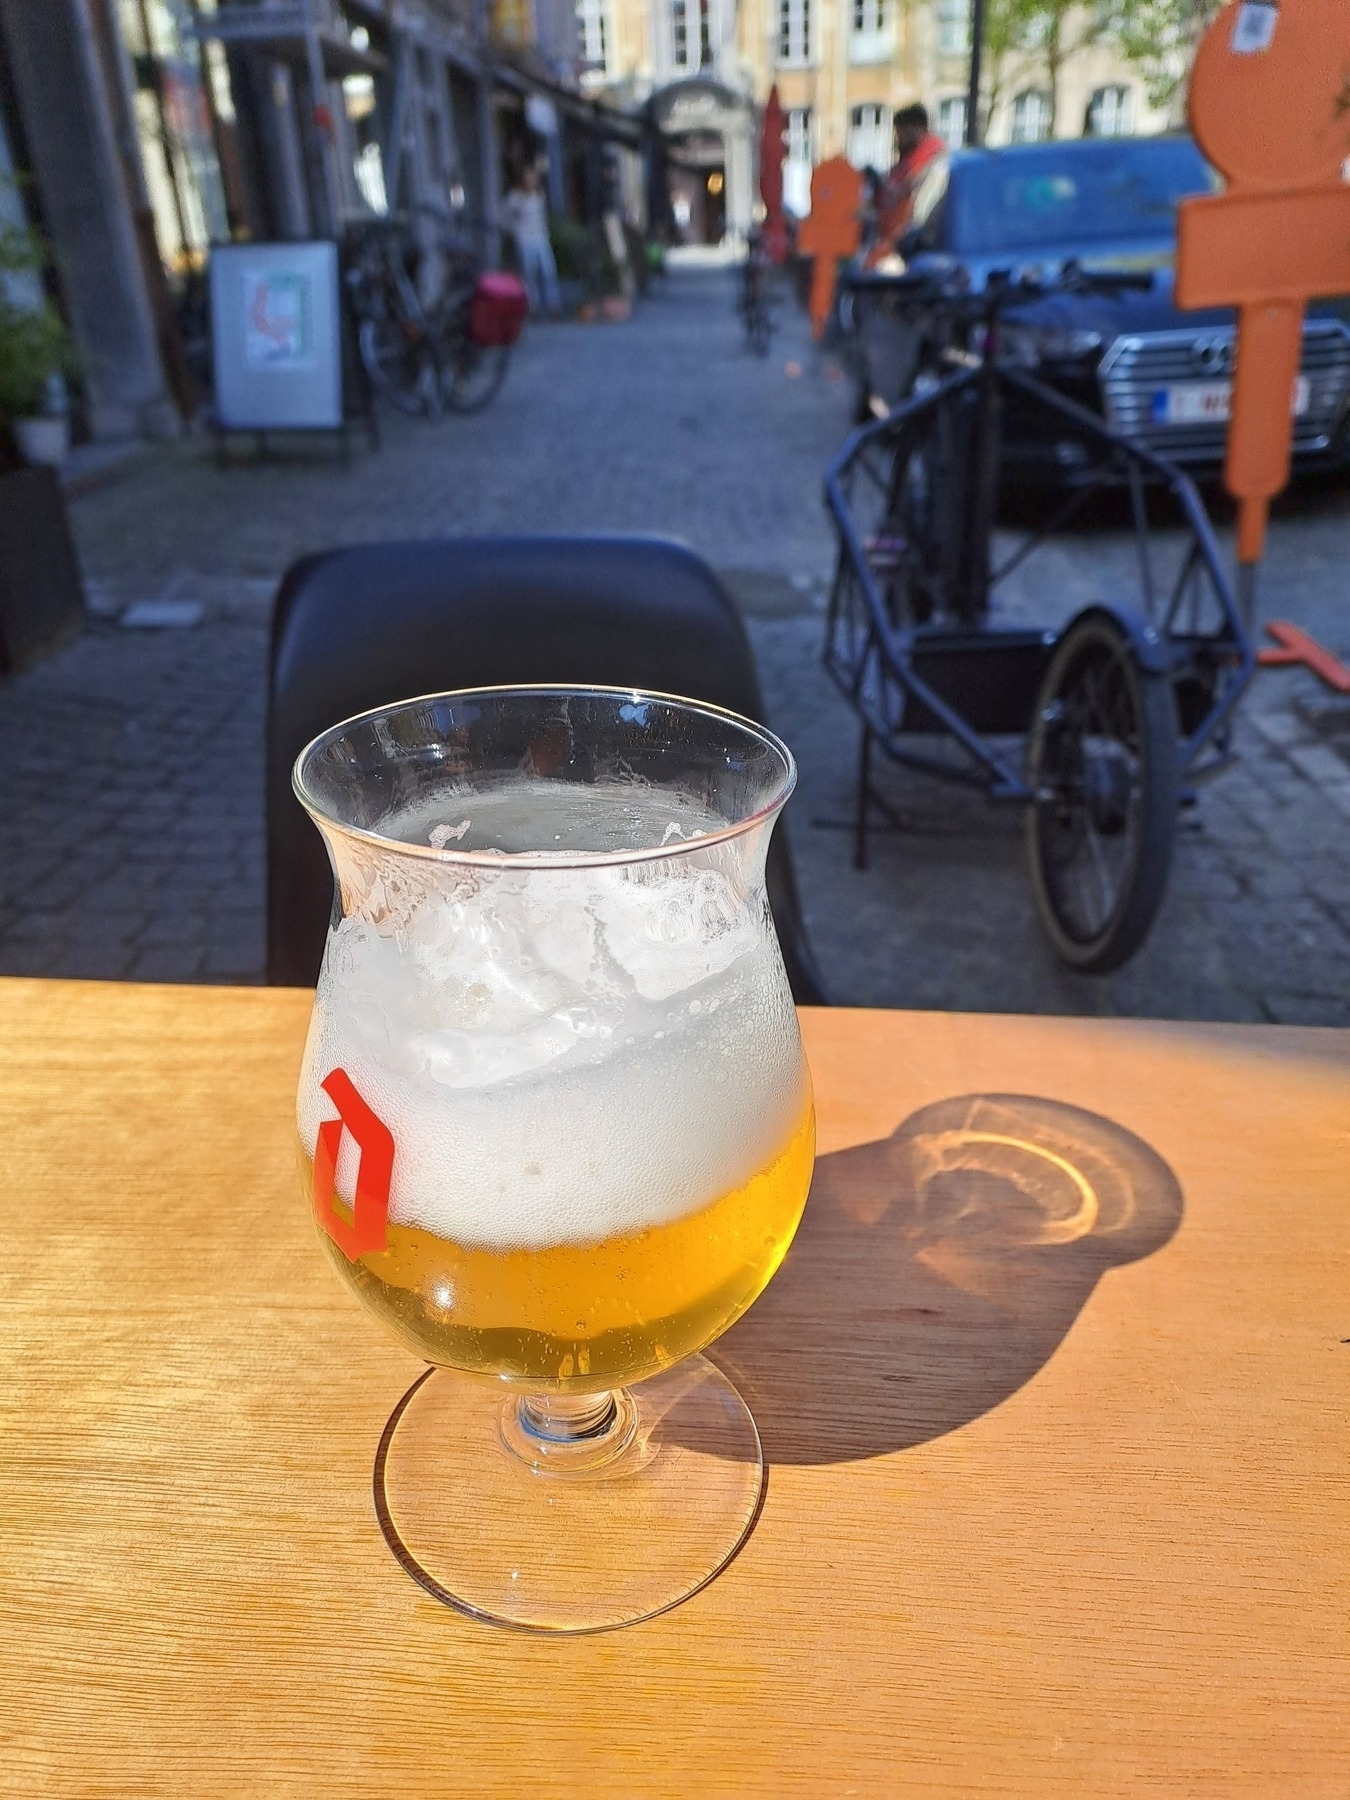 Enjoying a beer in the sun in my hometown of Antwerp